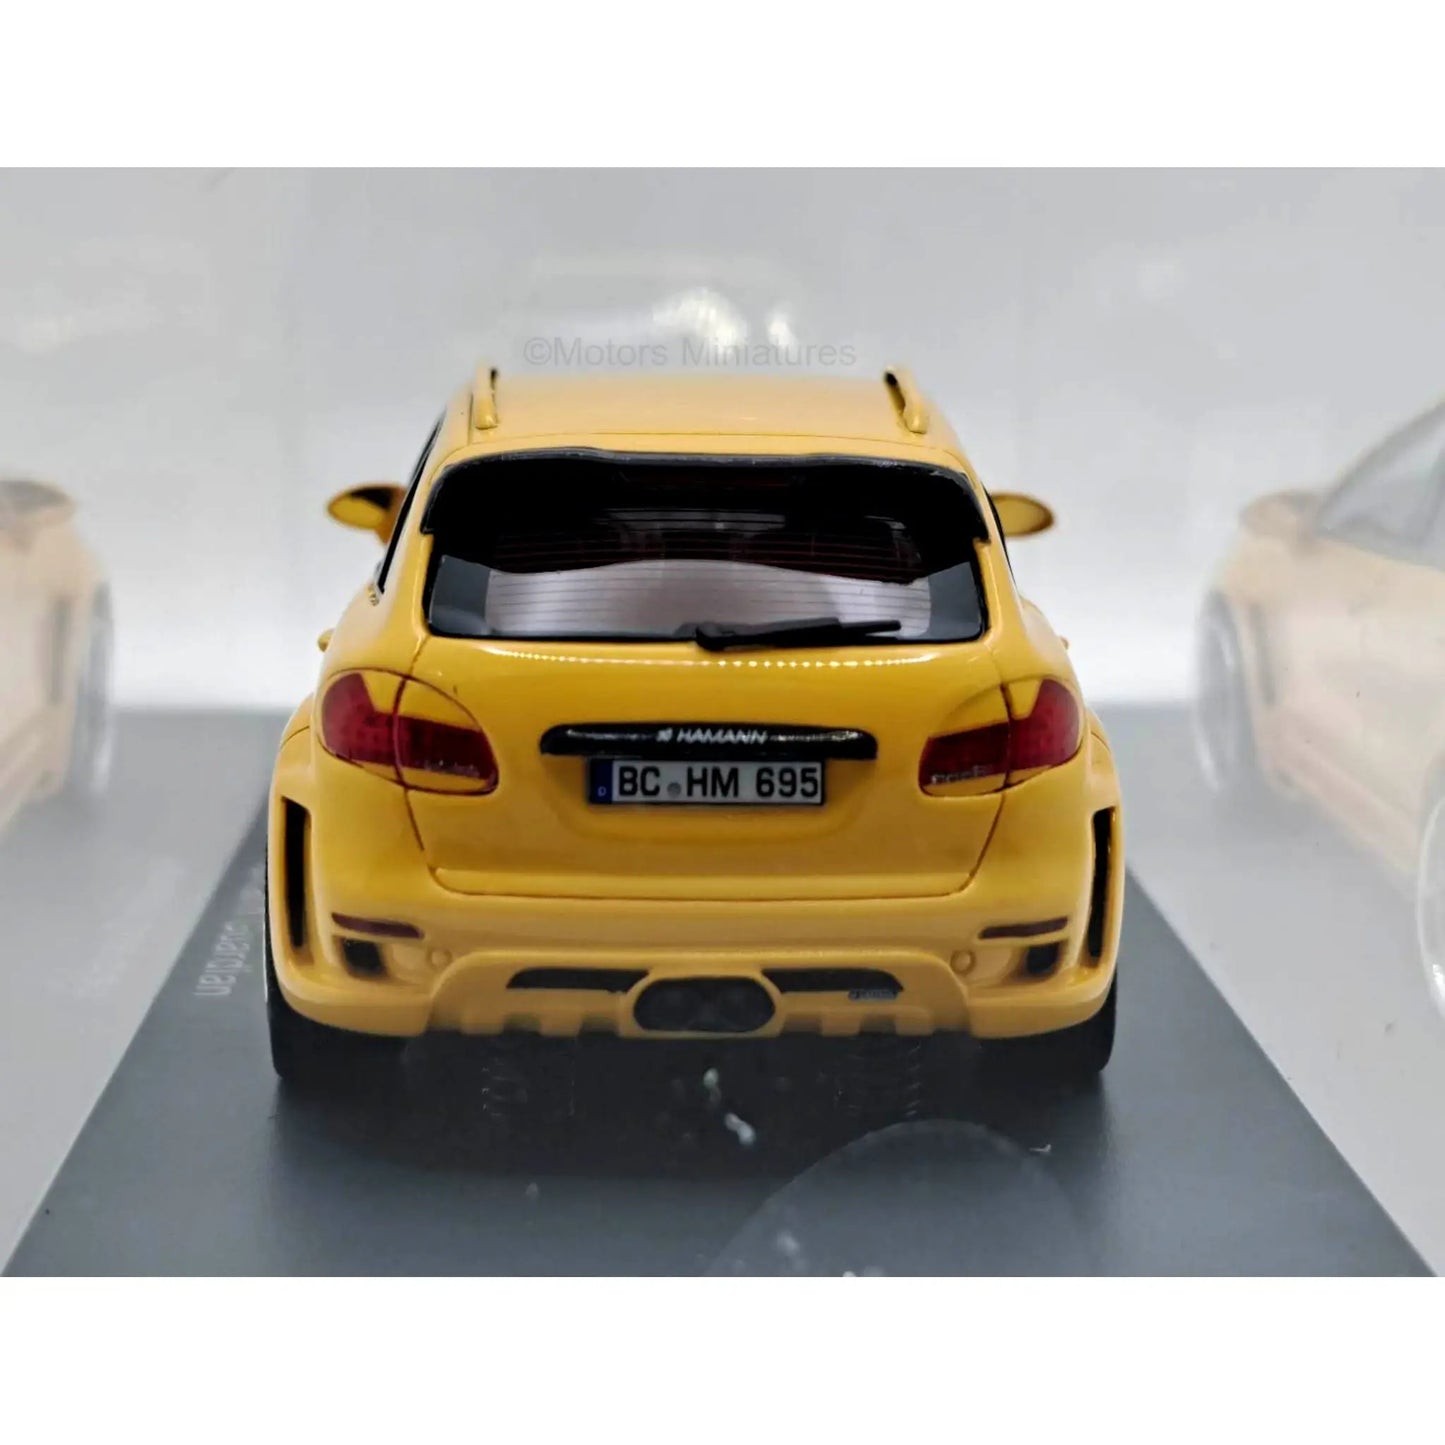 Porsche Cayenne Turbo Hamann Guardian 2011 Neo Scale Models 1/43 | Motors Miniatures